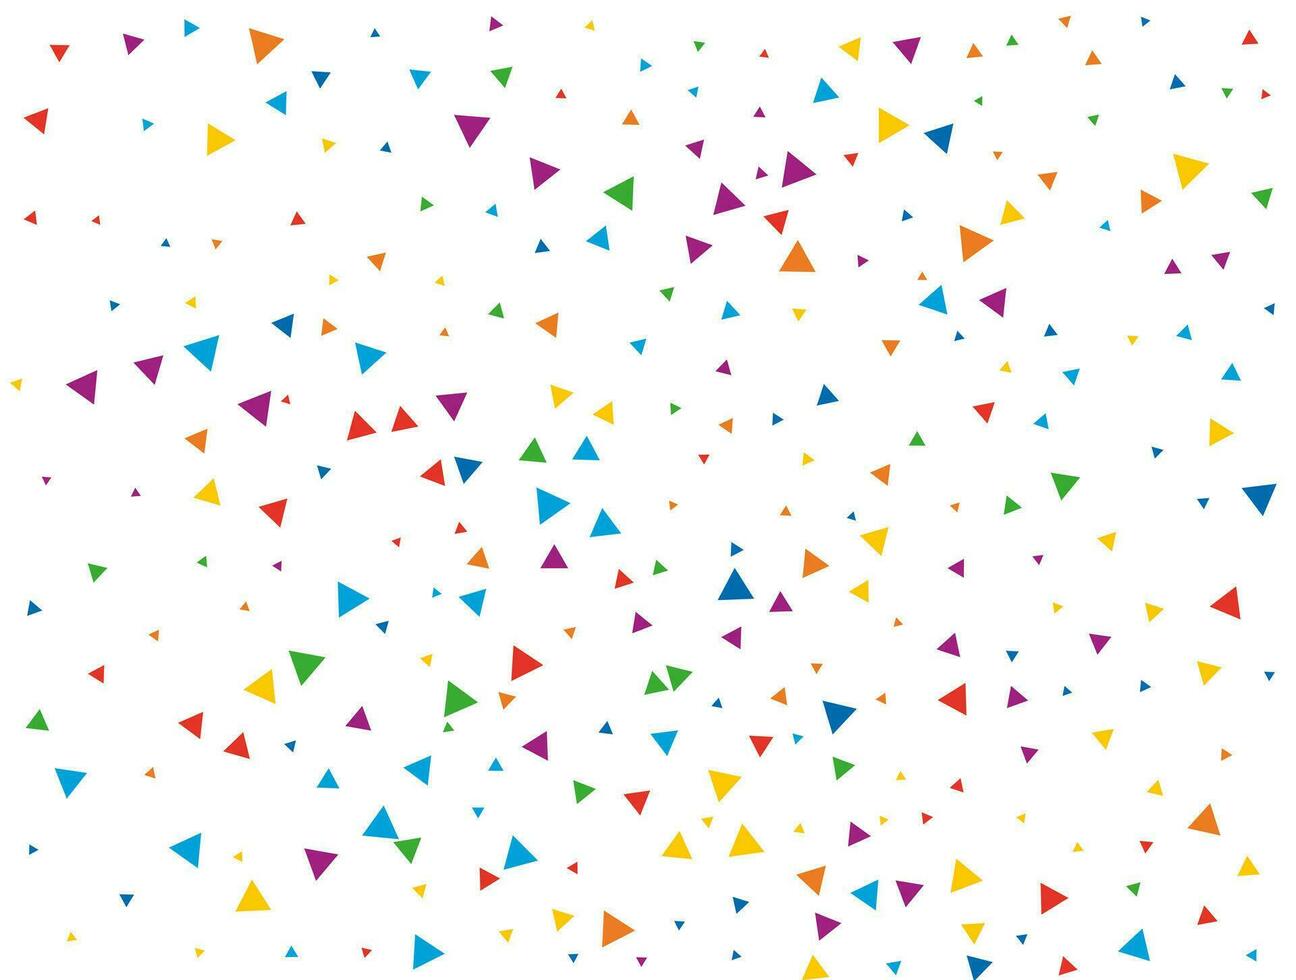 nieuw jaar driehoekig confetti. licht regenboog schitteren confetti achtergrond. gekleurde feestelijk structuur vector